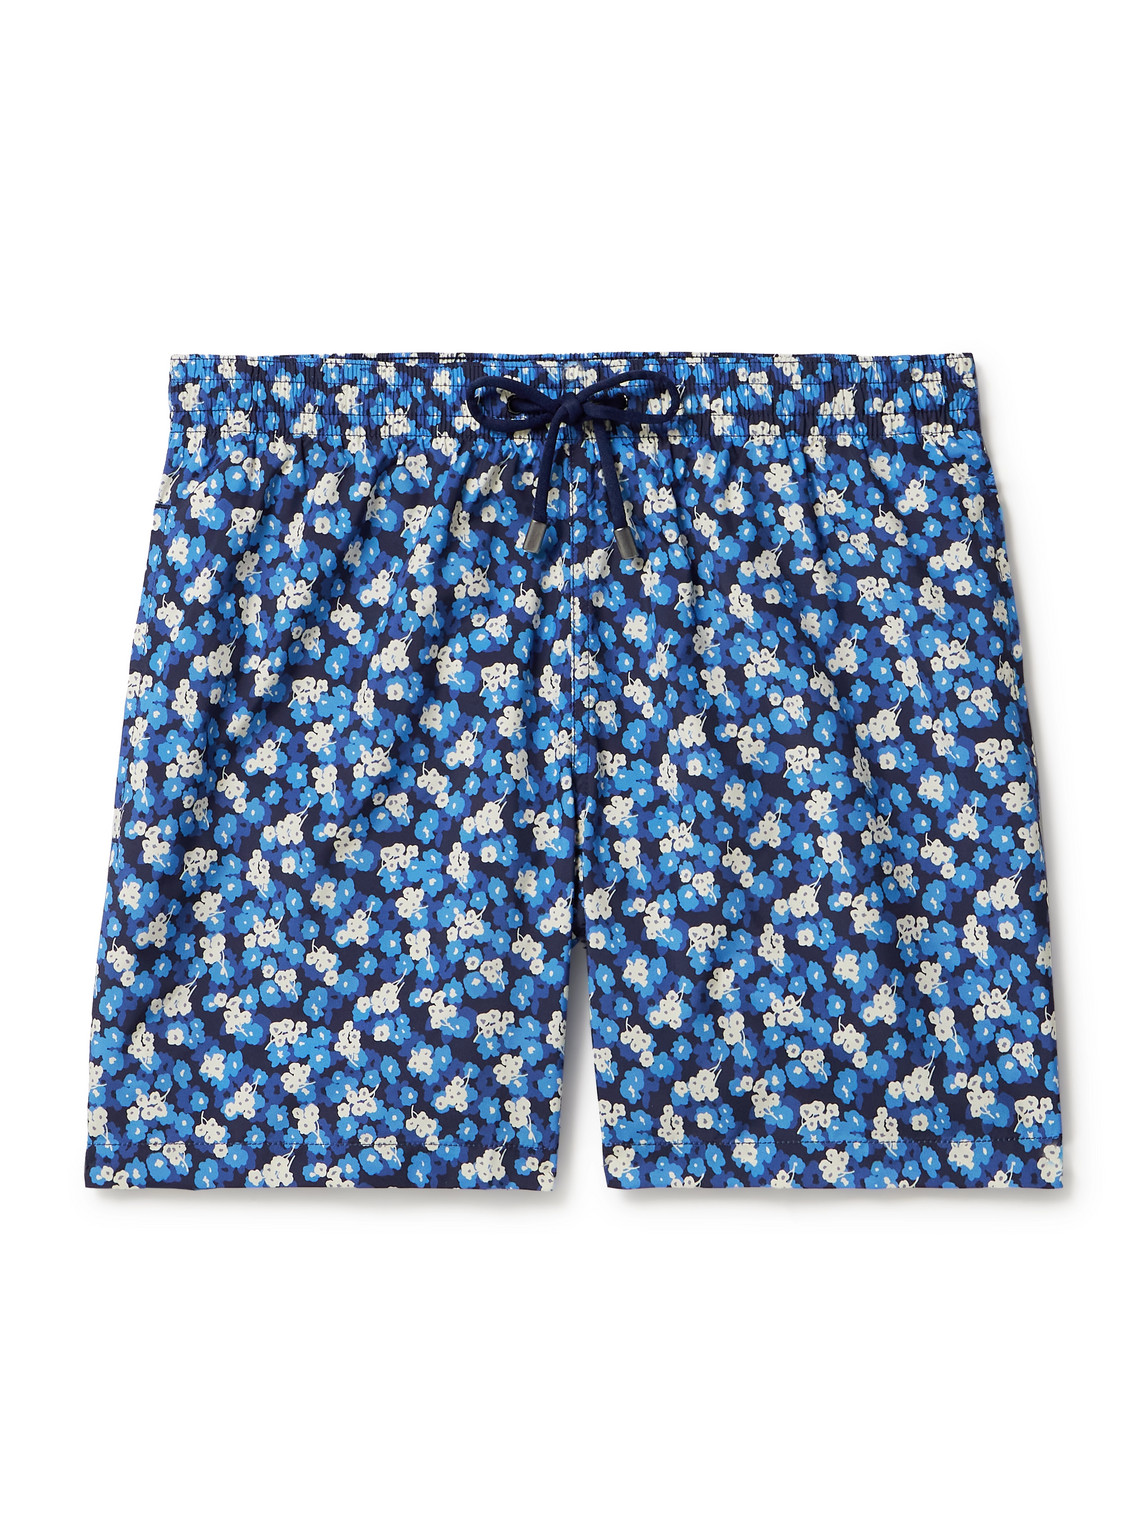 Canali - Straight-Leg Mid-Length Floral-Print Swim Shorts - Men - Blue - L von Canali